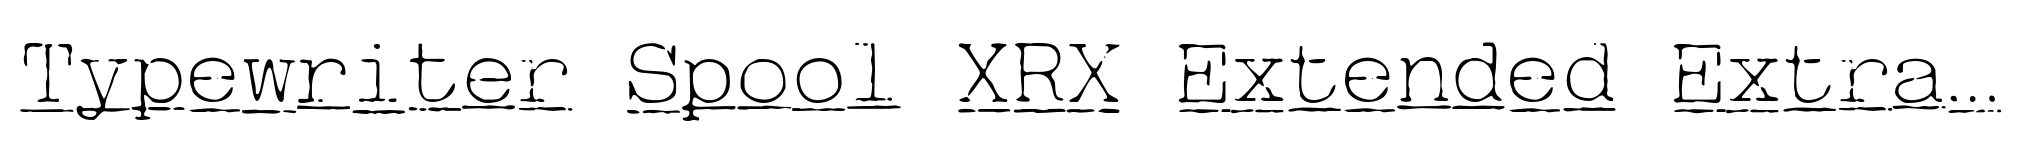 Typewriter Spool XRX Extended Extra Light Italic image